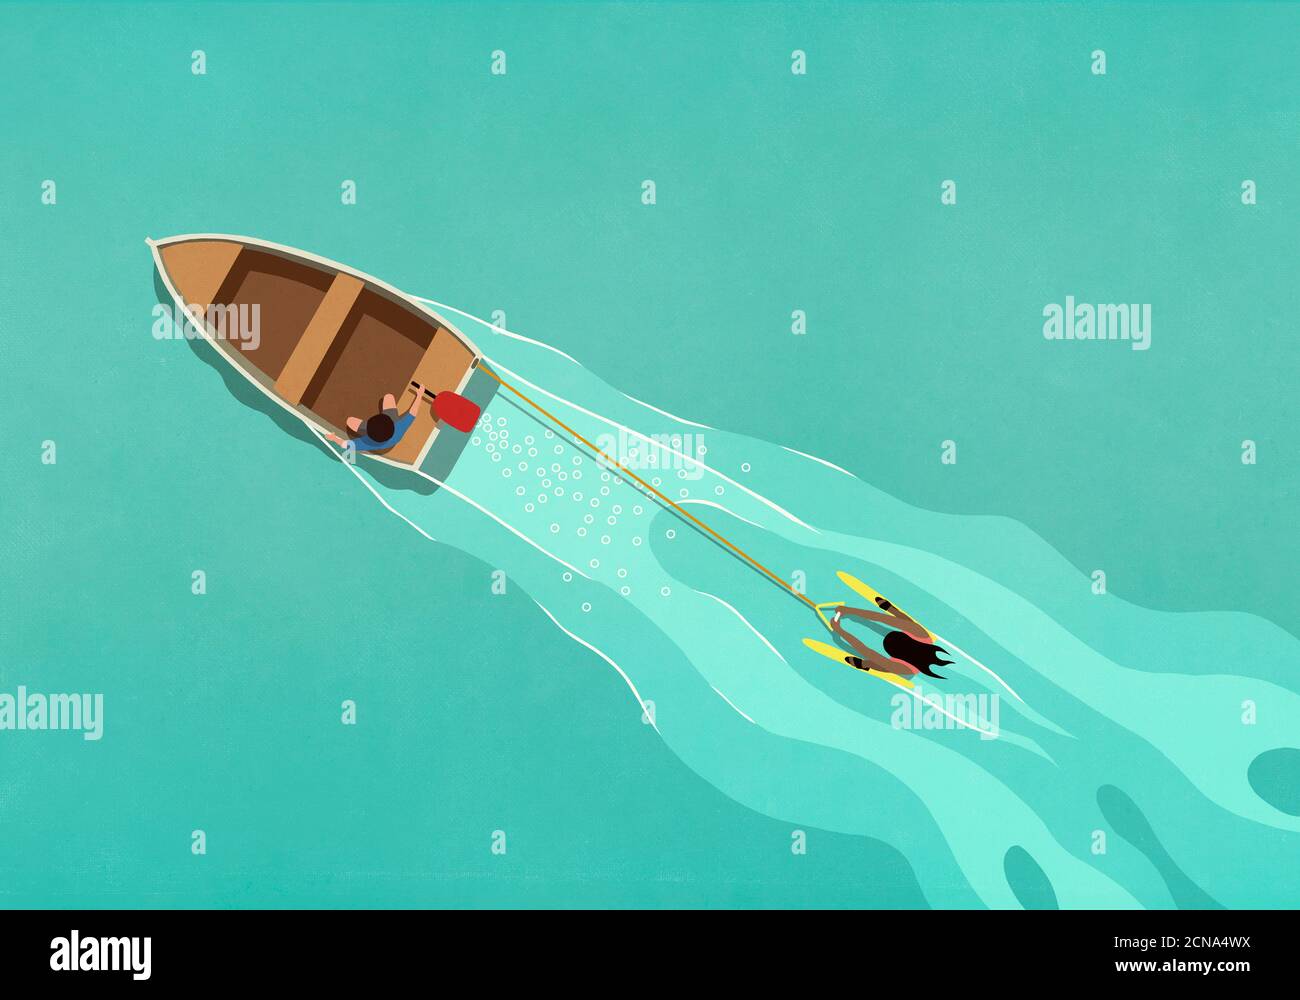 Rowboat pulling water skier Stock Photo - Alamy